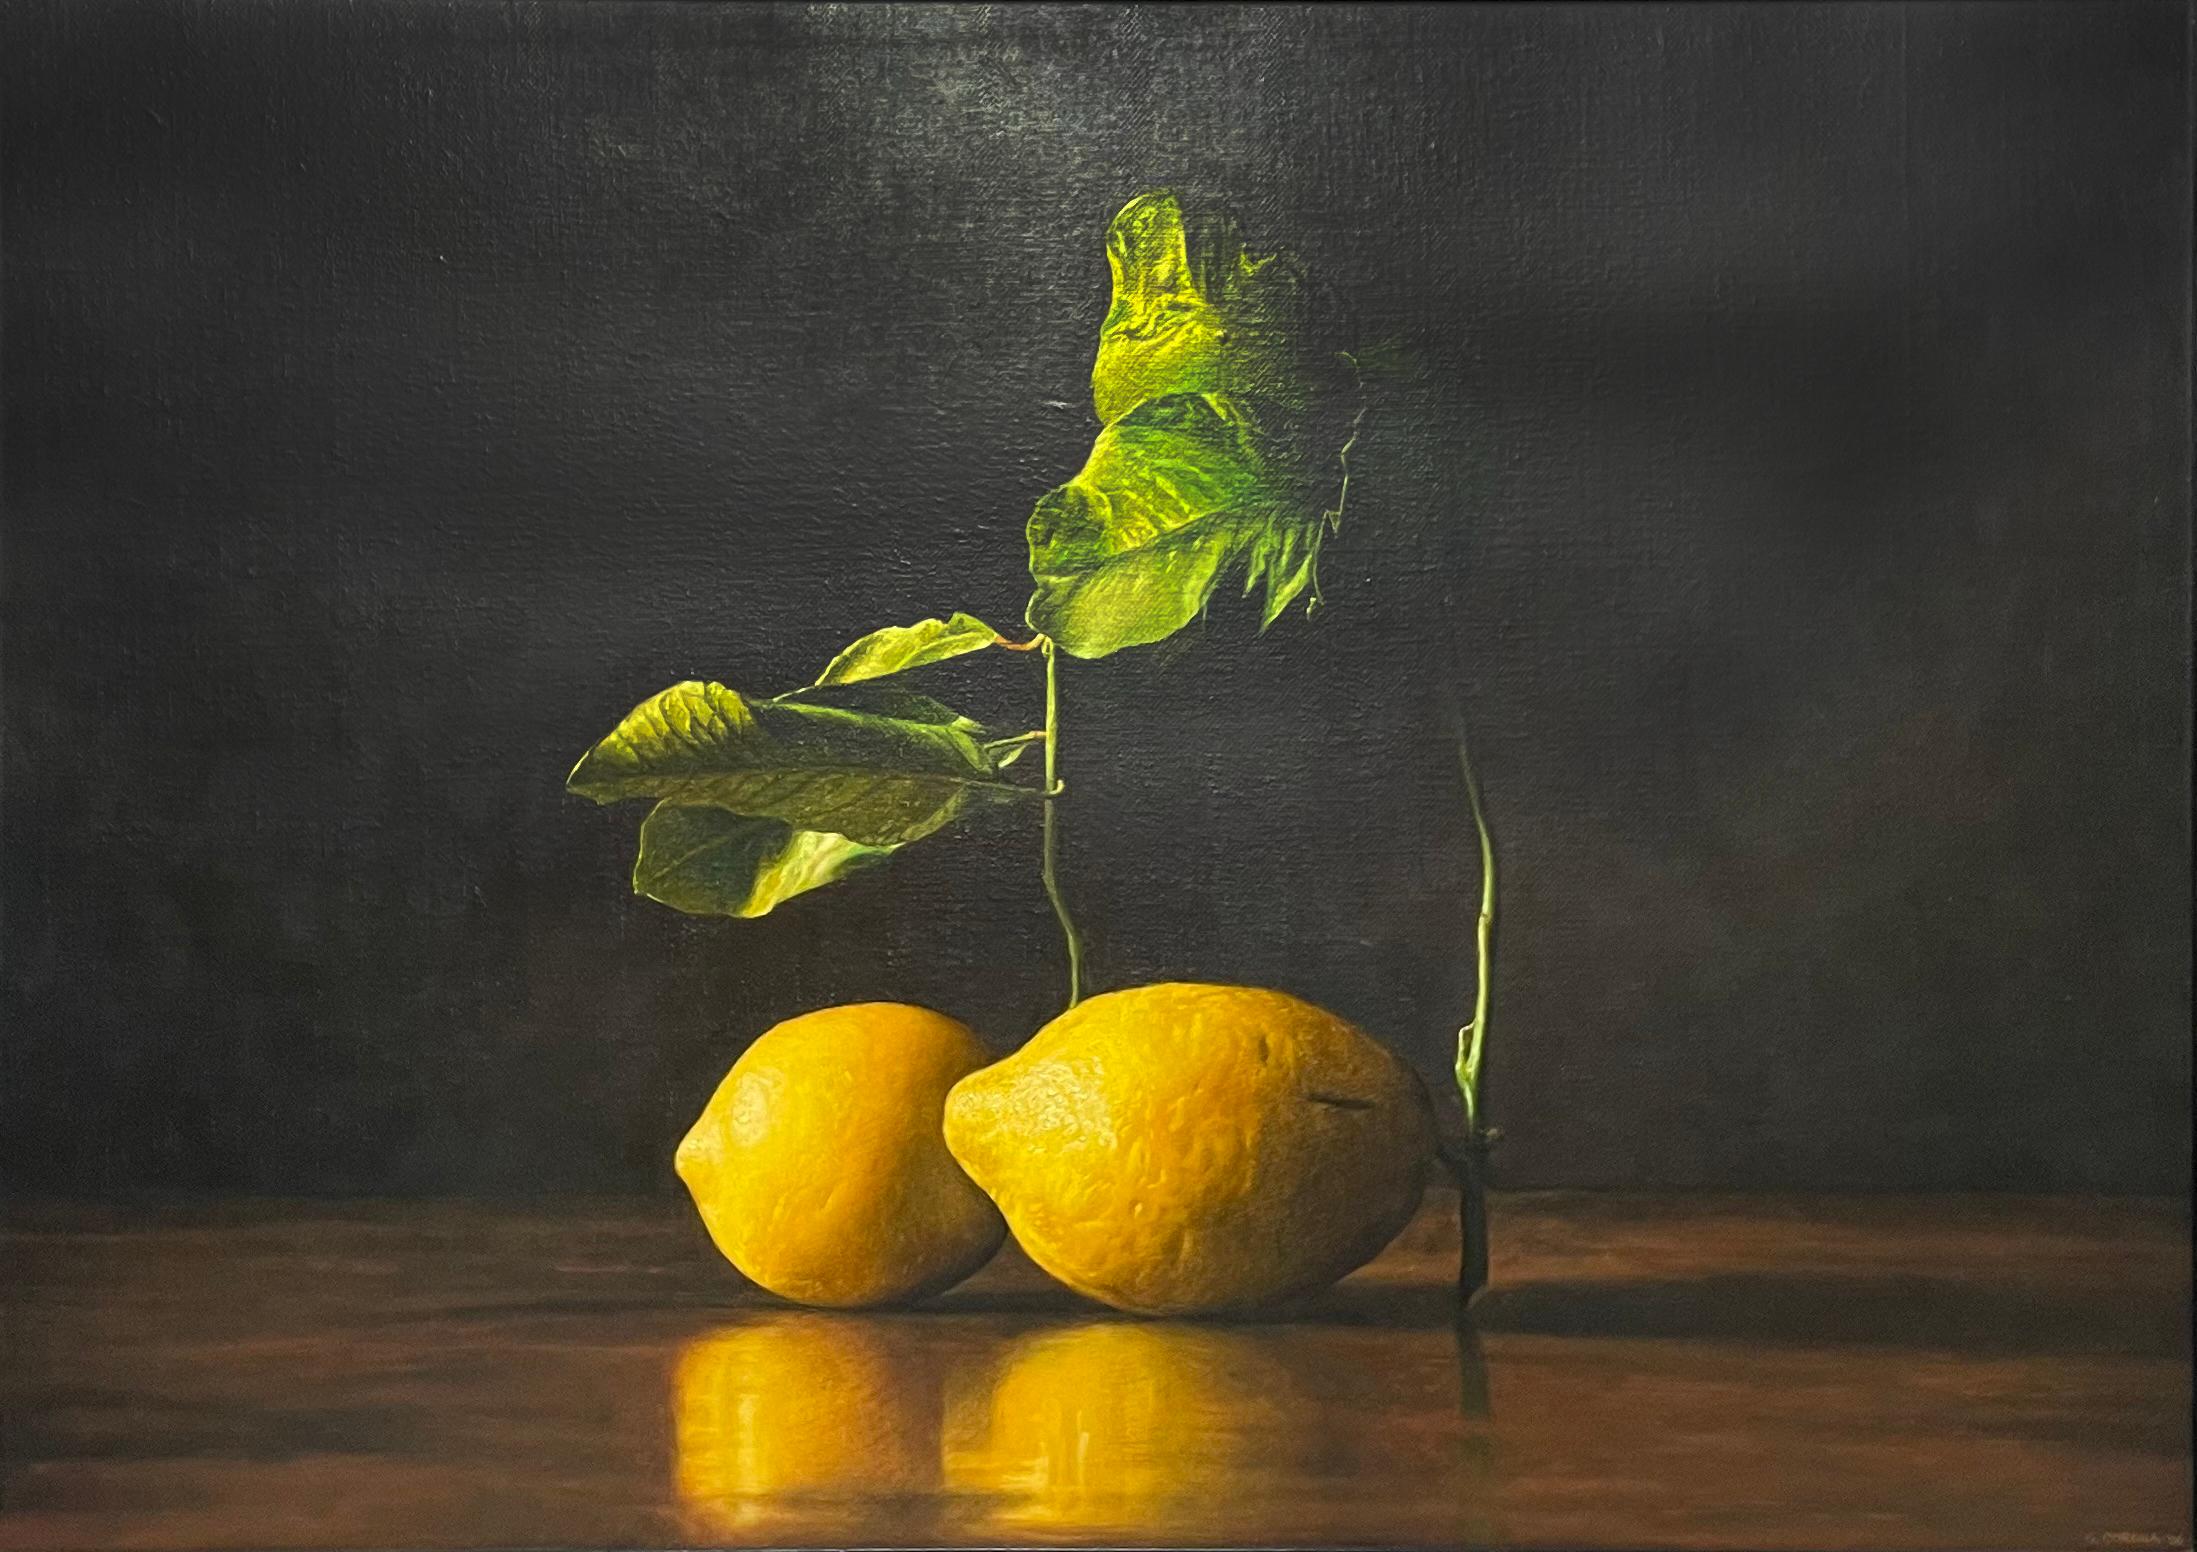 Classic contemporary lemons still life by Italian fine artist 